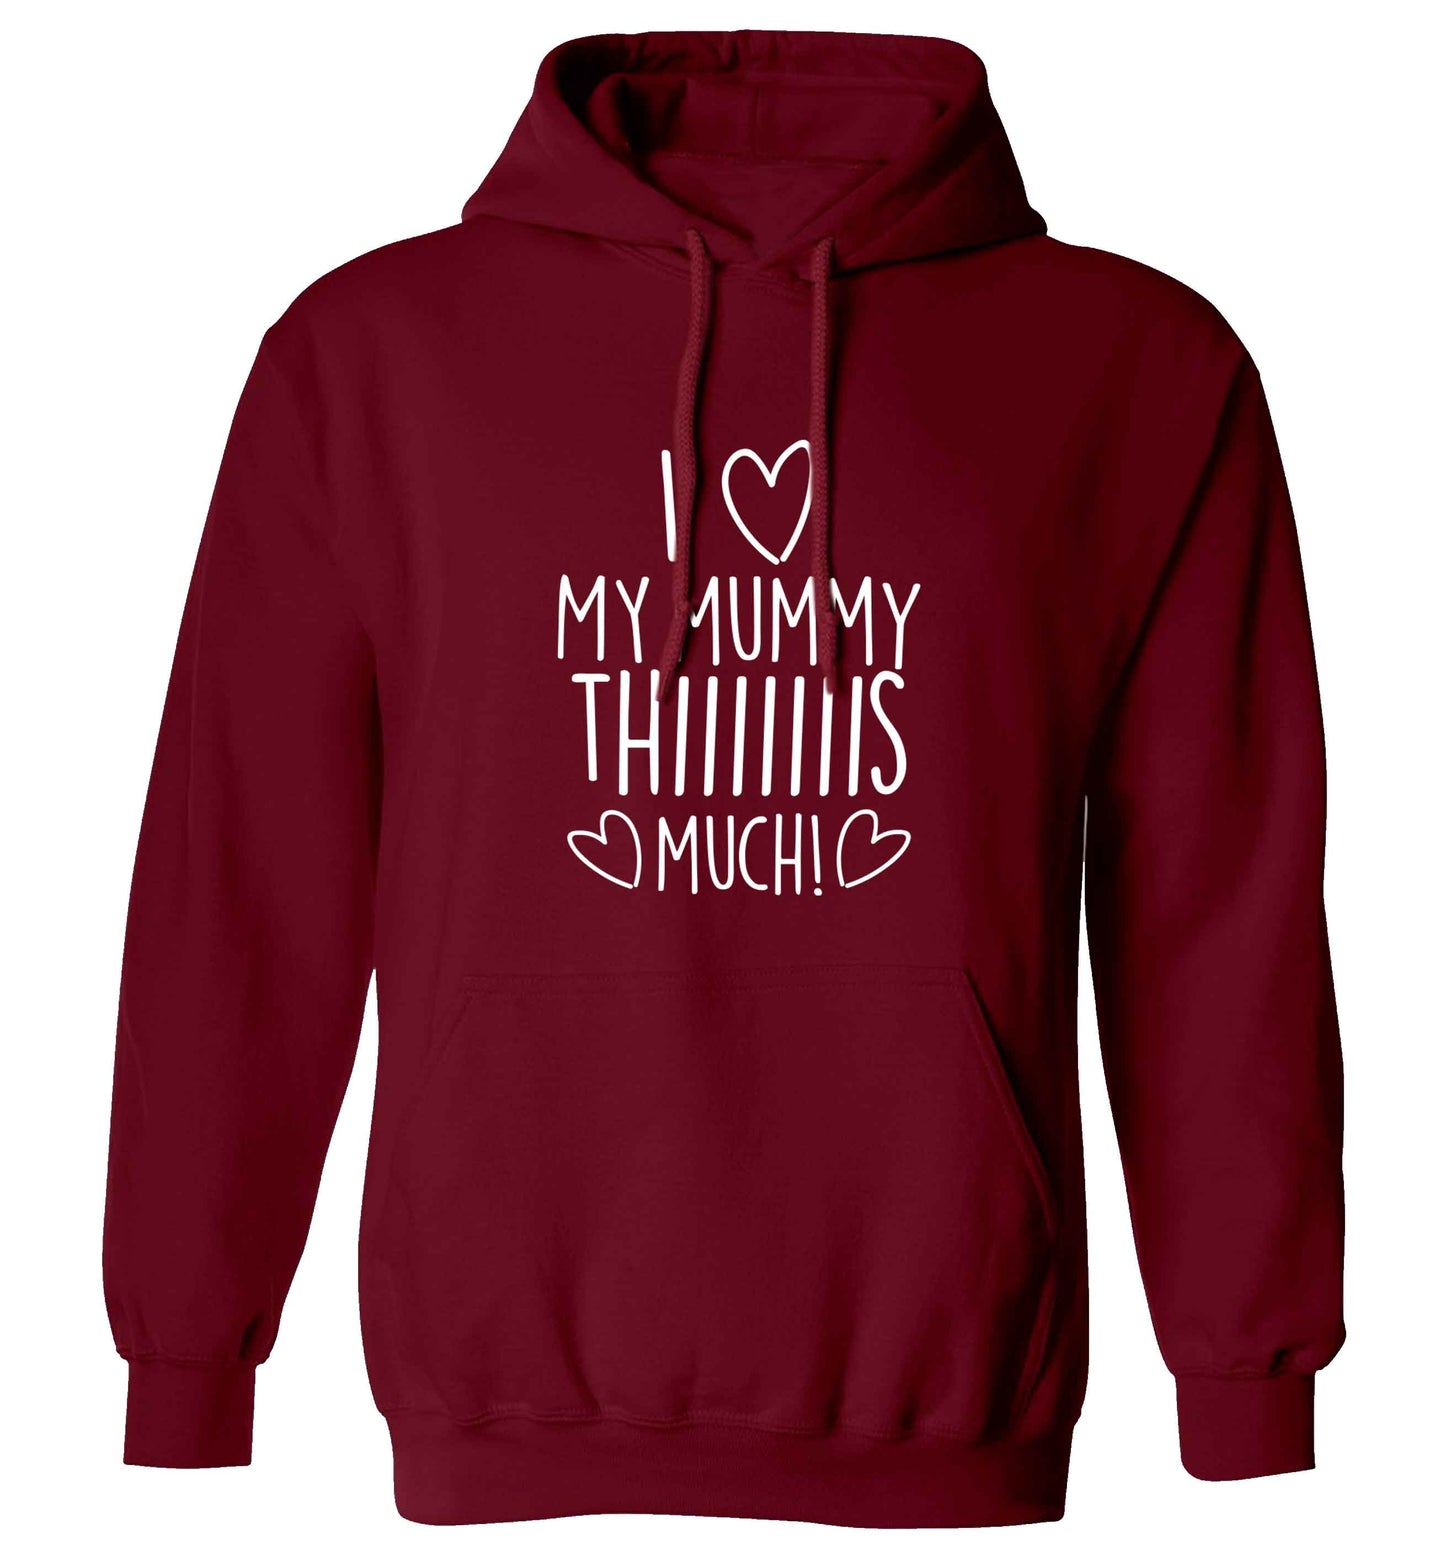 I love my mummy thiiiiis much! adults unisex maroon hoodie 2XL